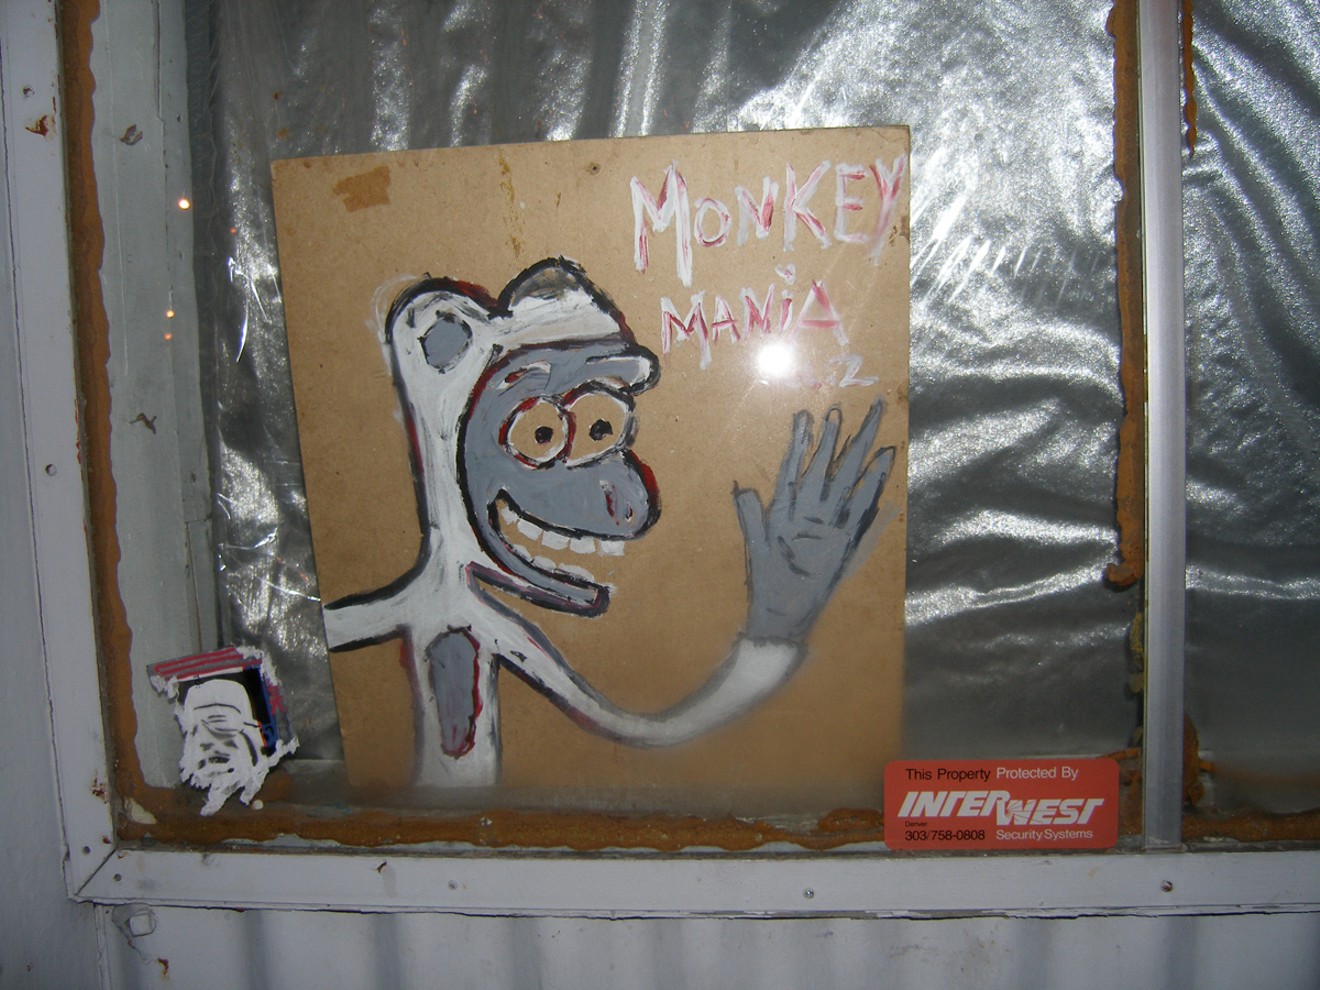 Monkey Mania sign, December 3, 2005.